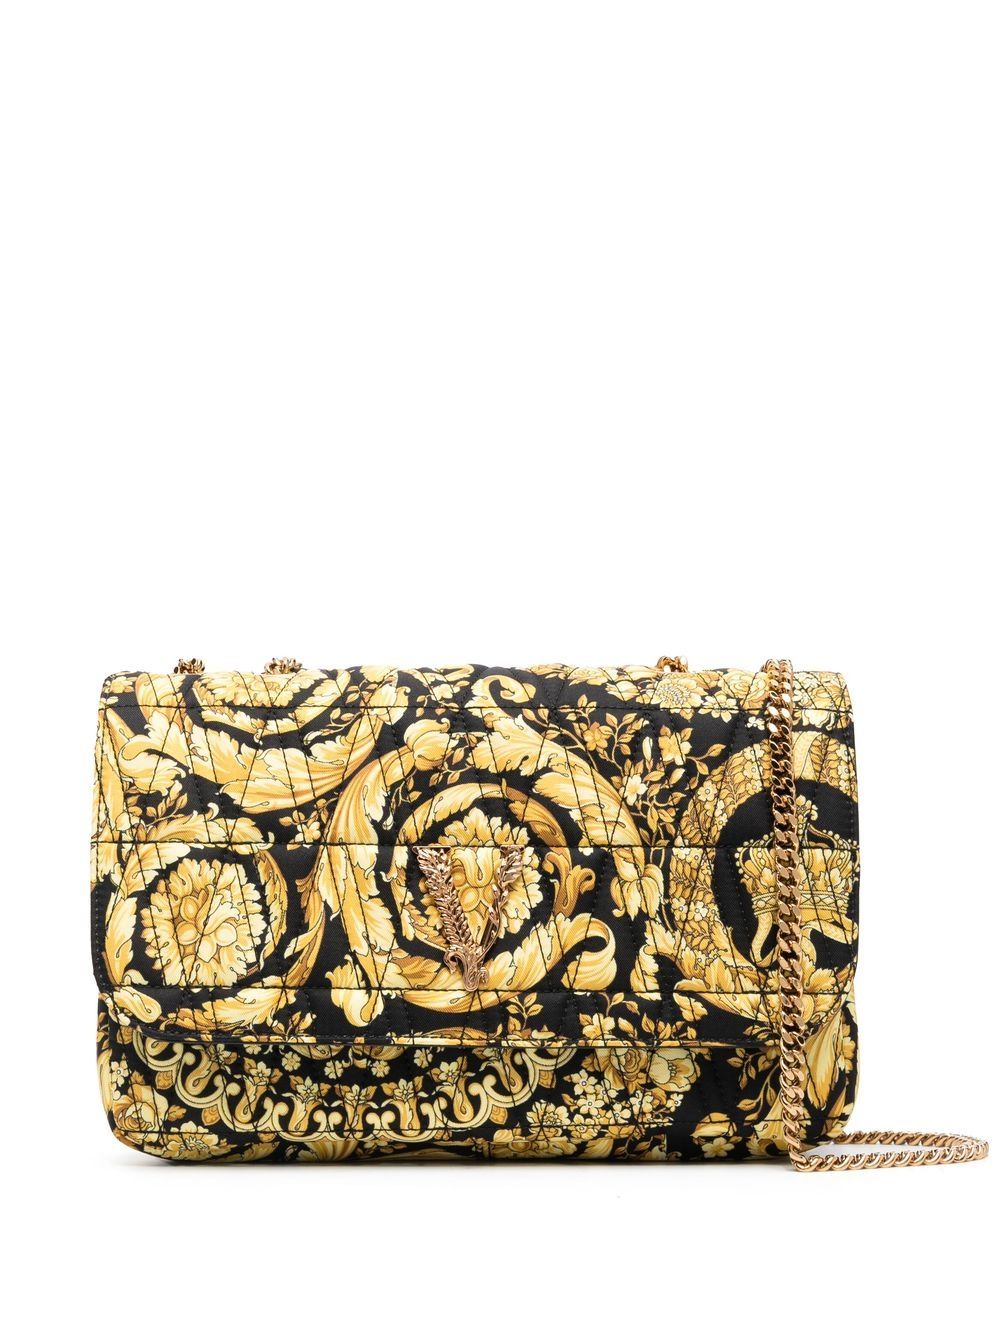 The article: VERSACE // VIRTUS BAG - The new Versace handbag line